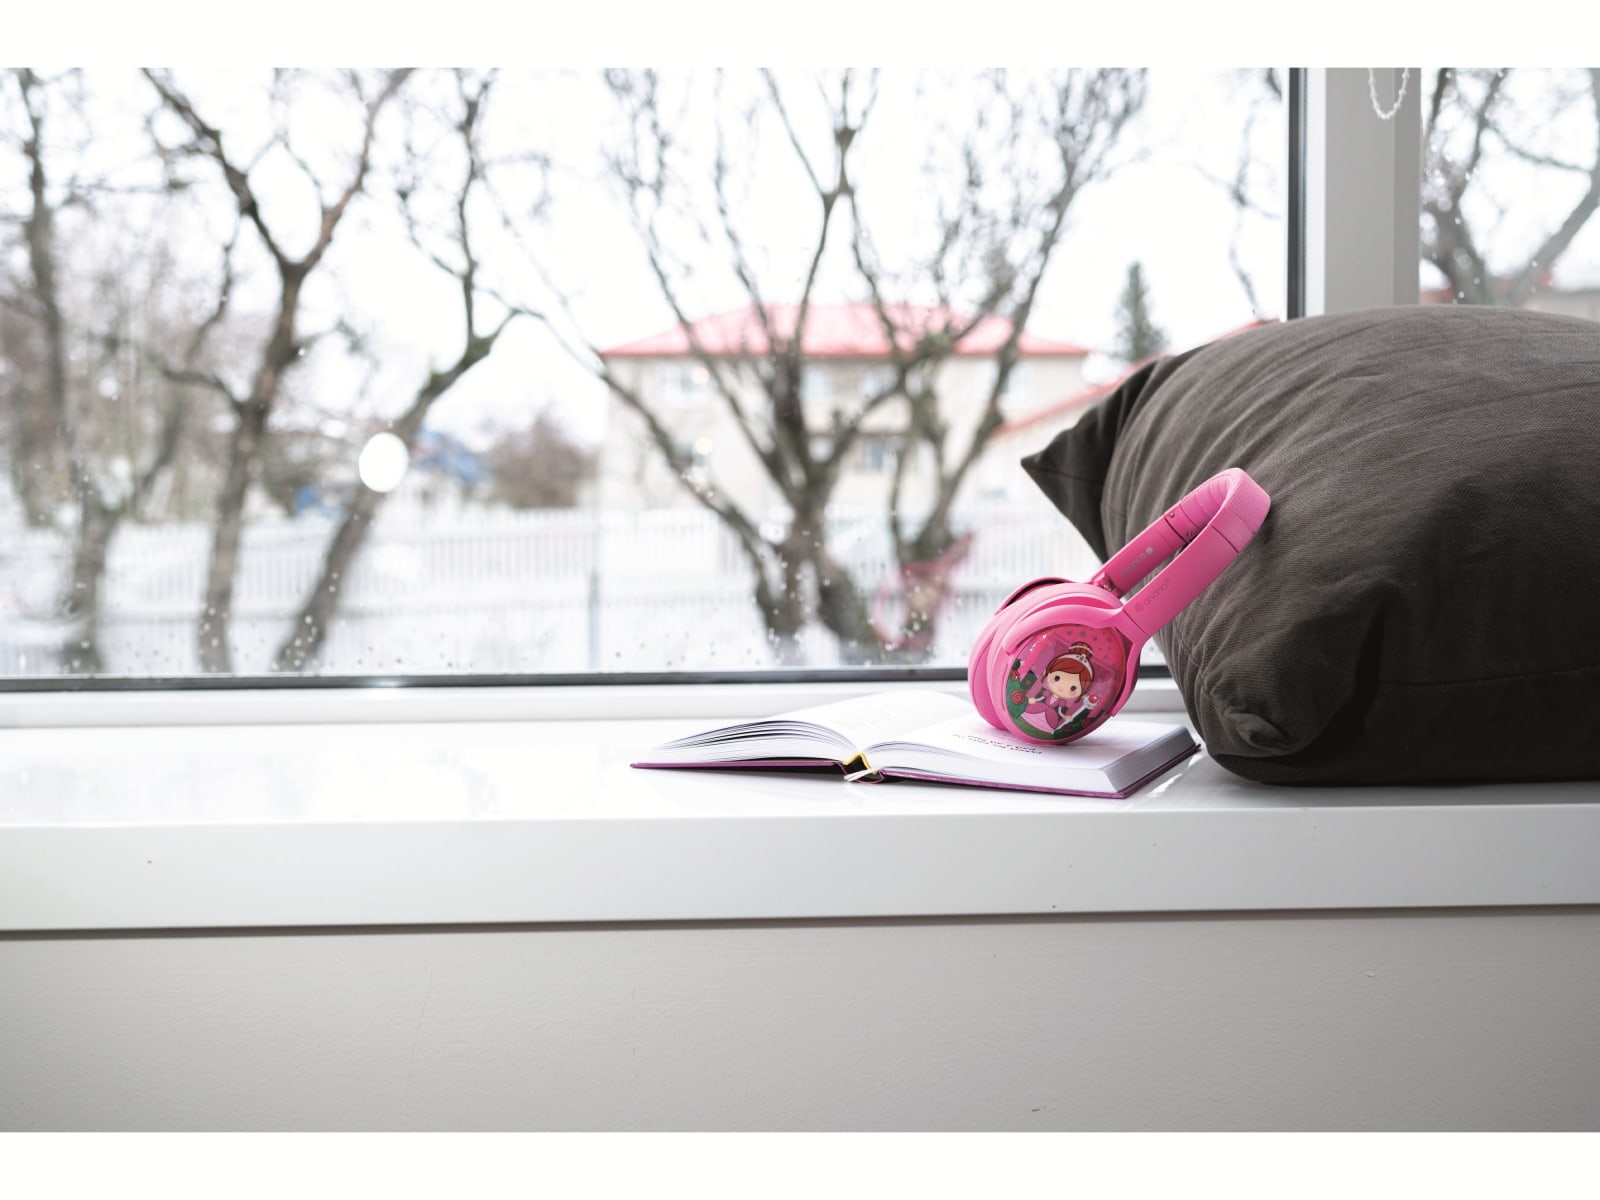 ONANOFF Bluetooth Over-Ear Kopfhörer BuddyPhones Cosmos+, für Kinder, pink